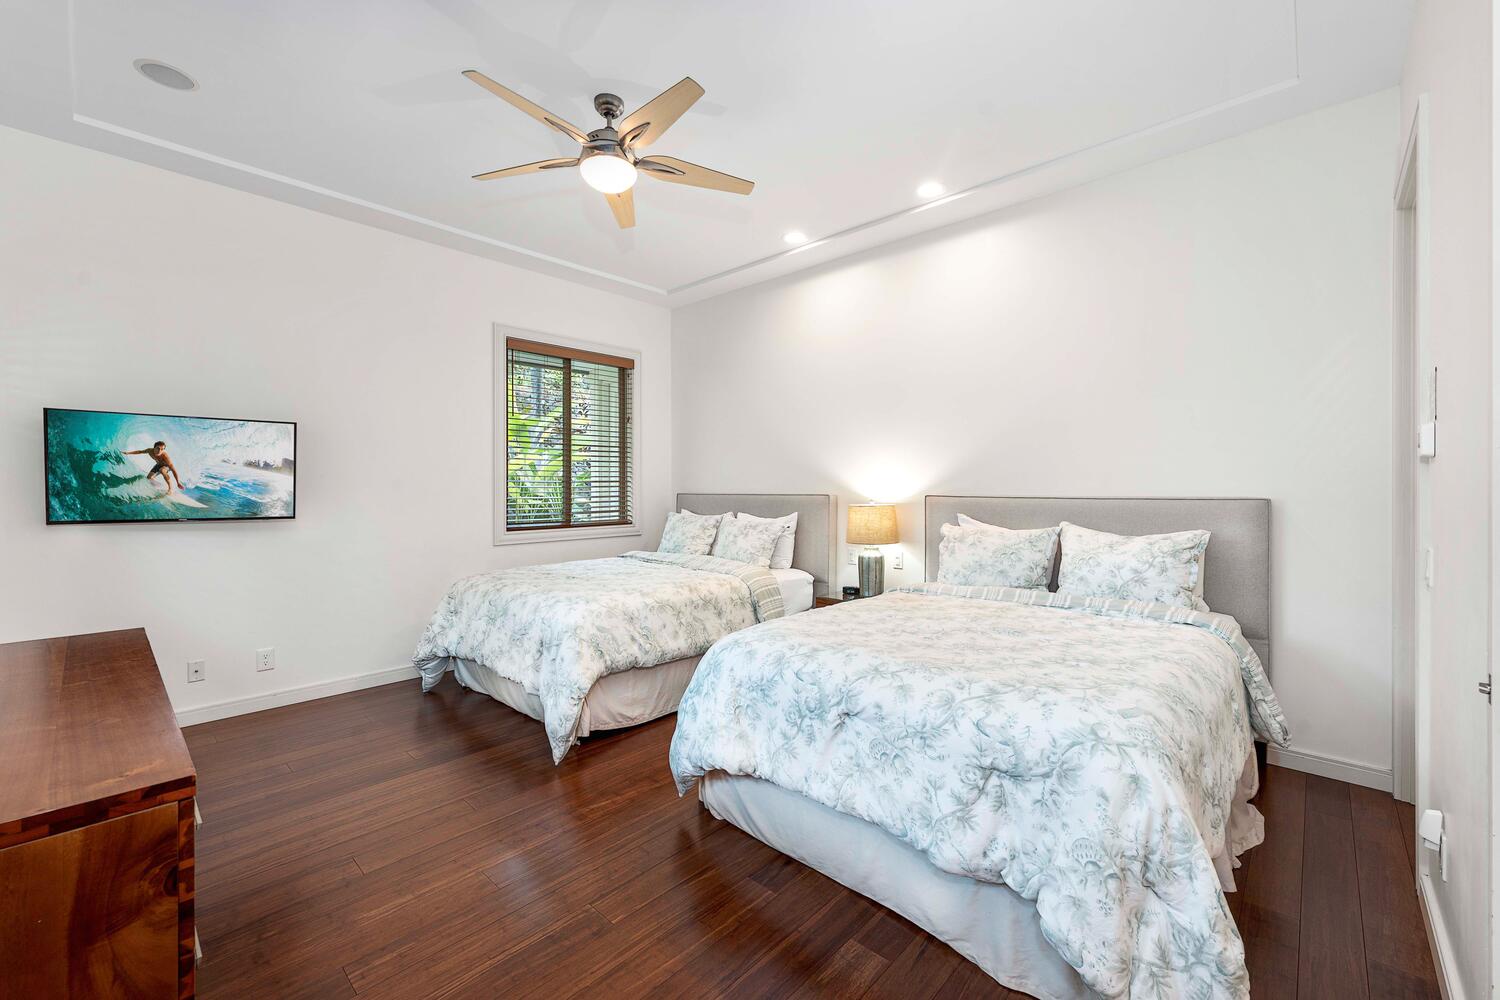 Kailua Kona Vacation Rentals, Blue Hawaii - Guest bedroom with 2 Queen beds.